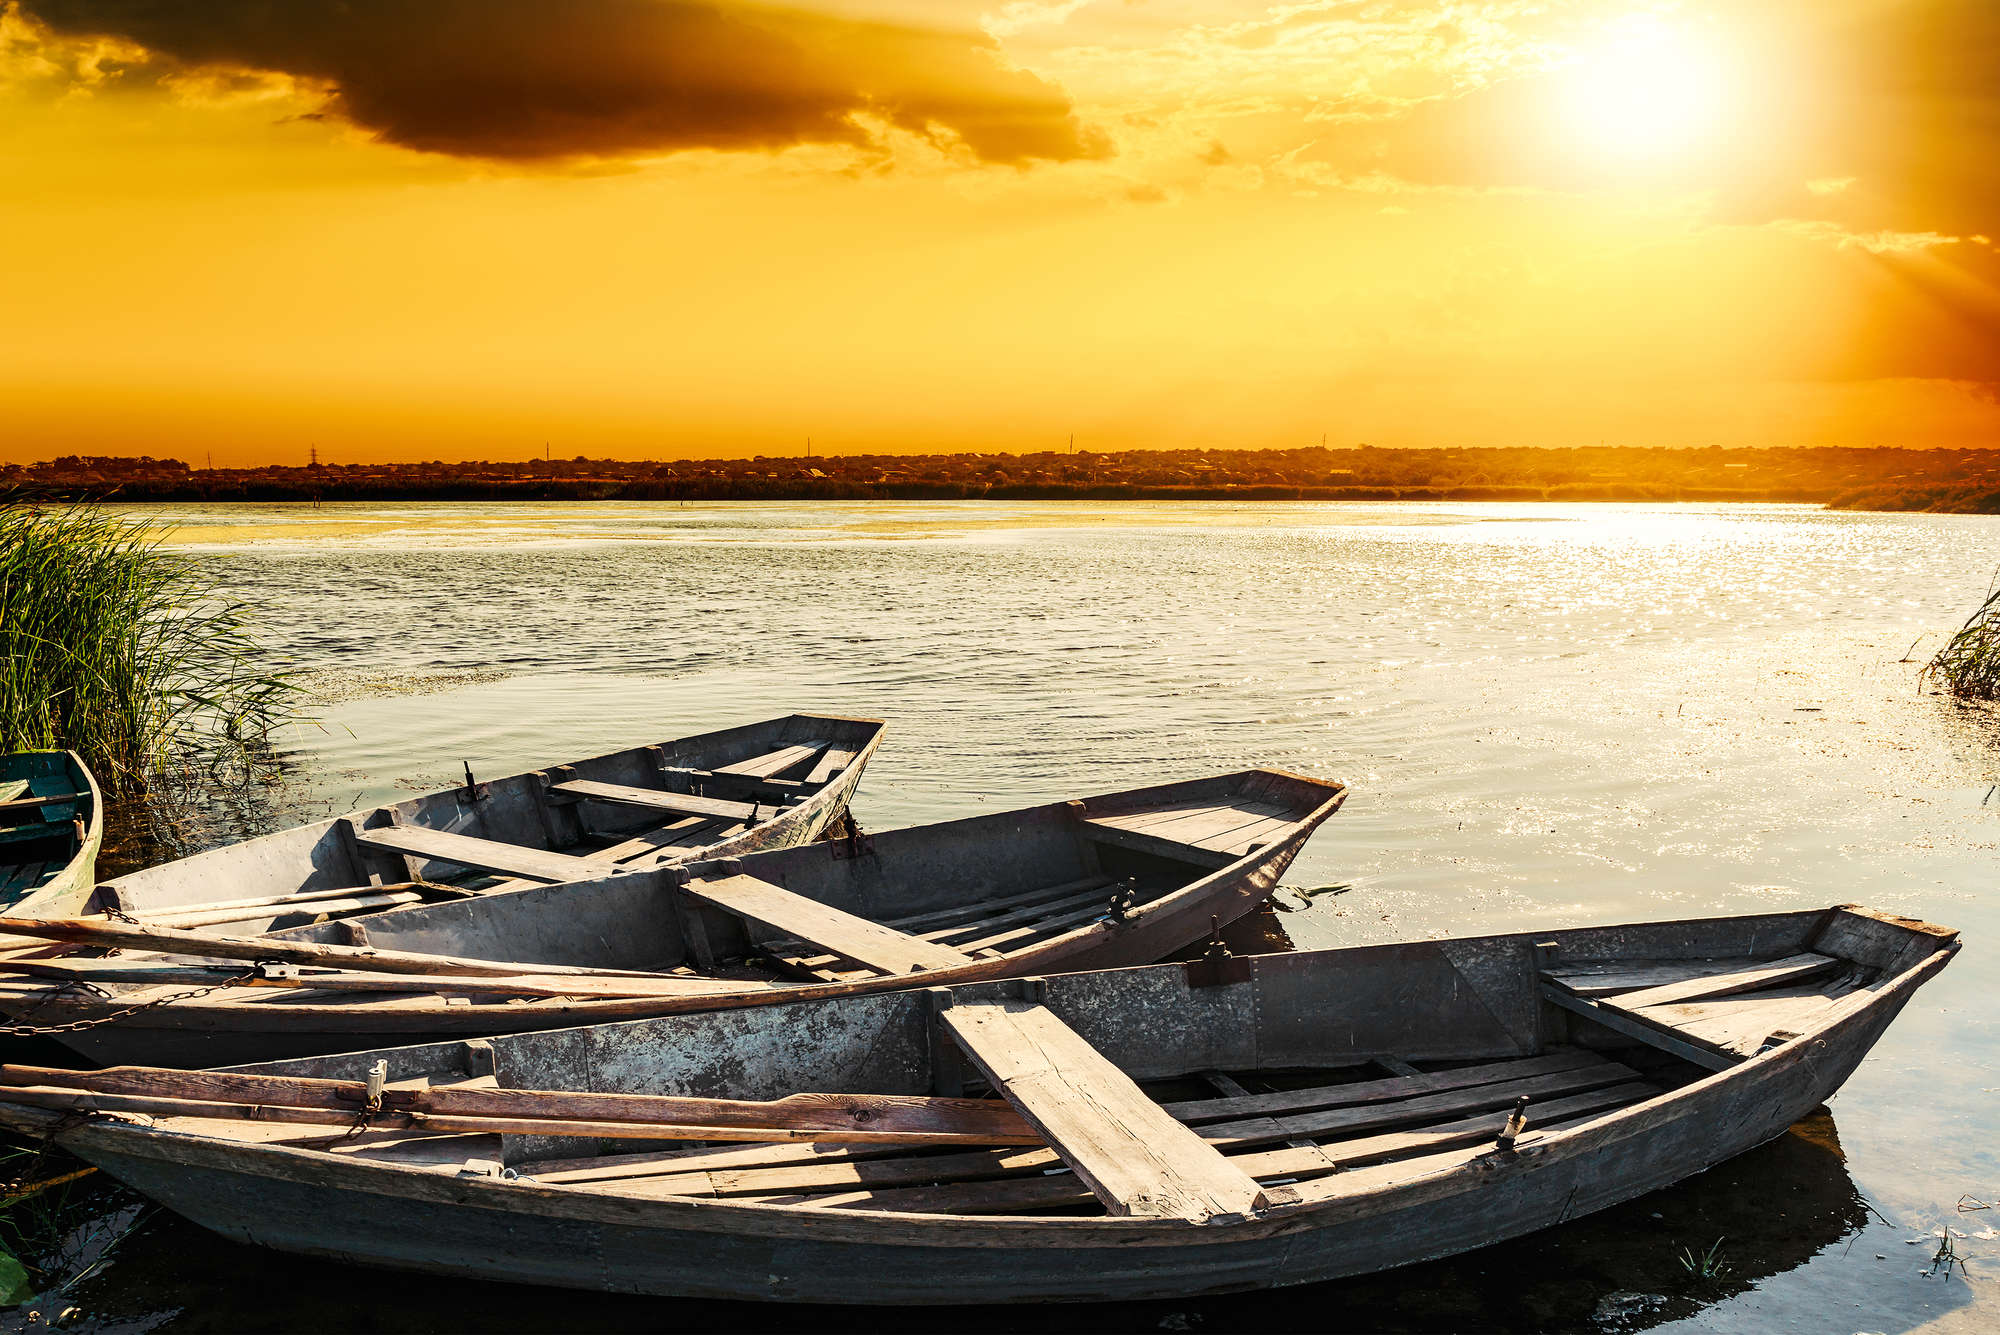             Natur Fototapete Holzboote am See auf Strukturvlies
        